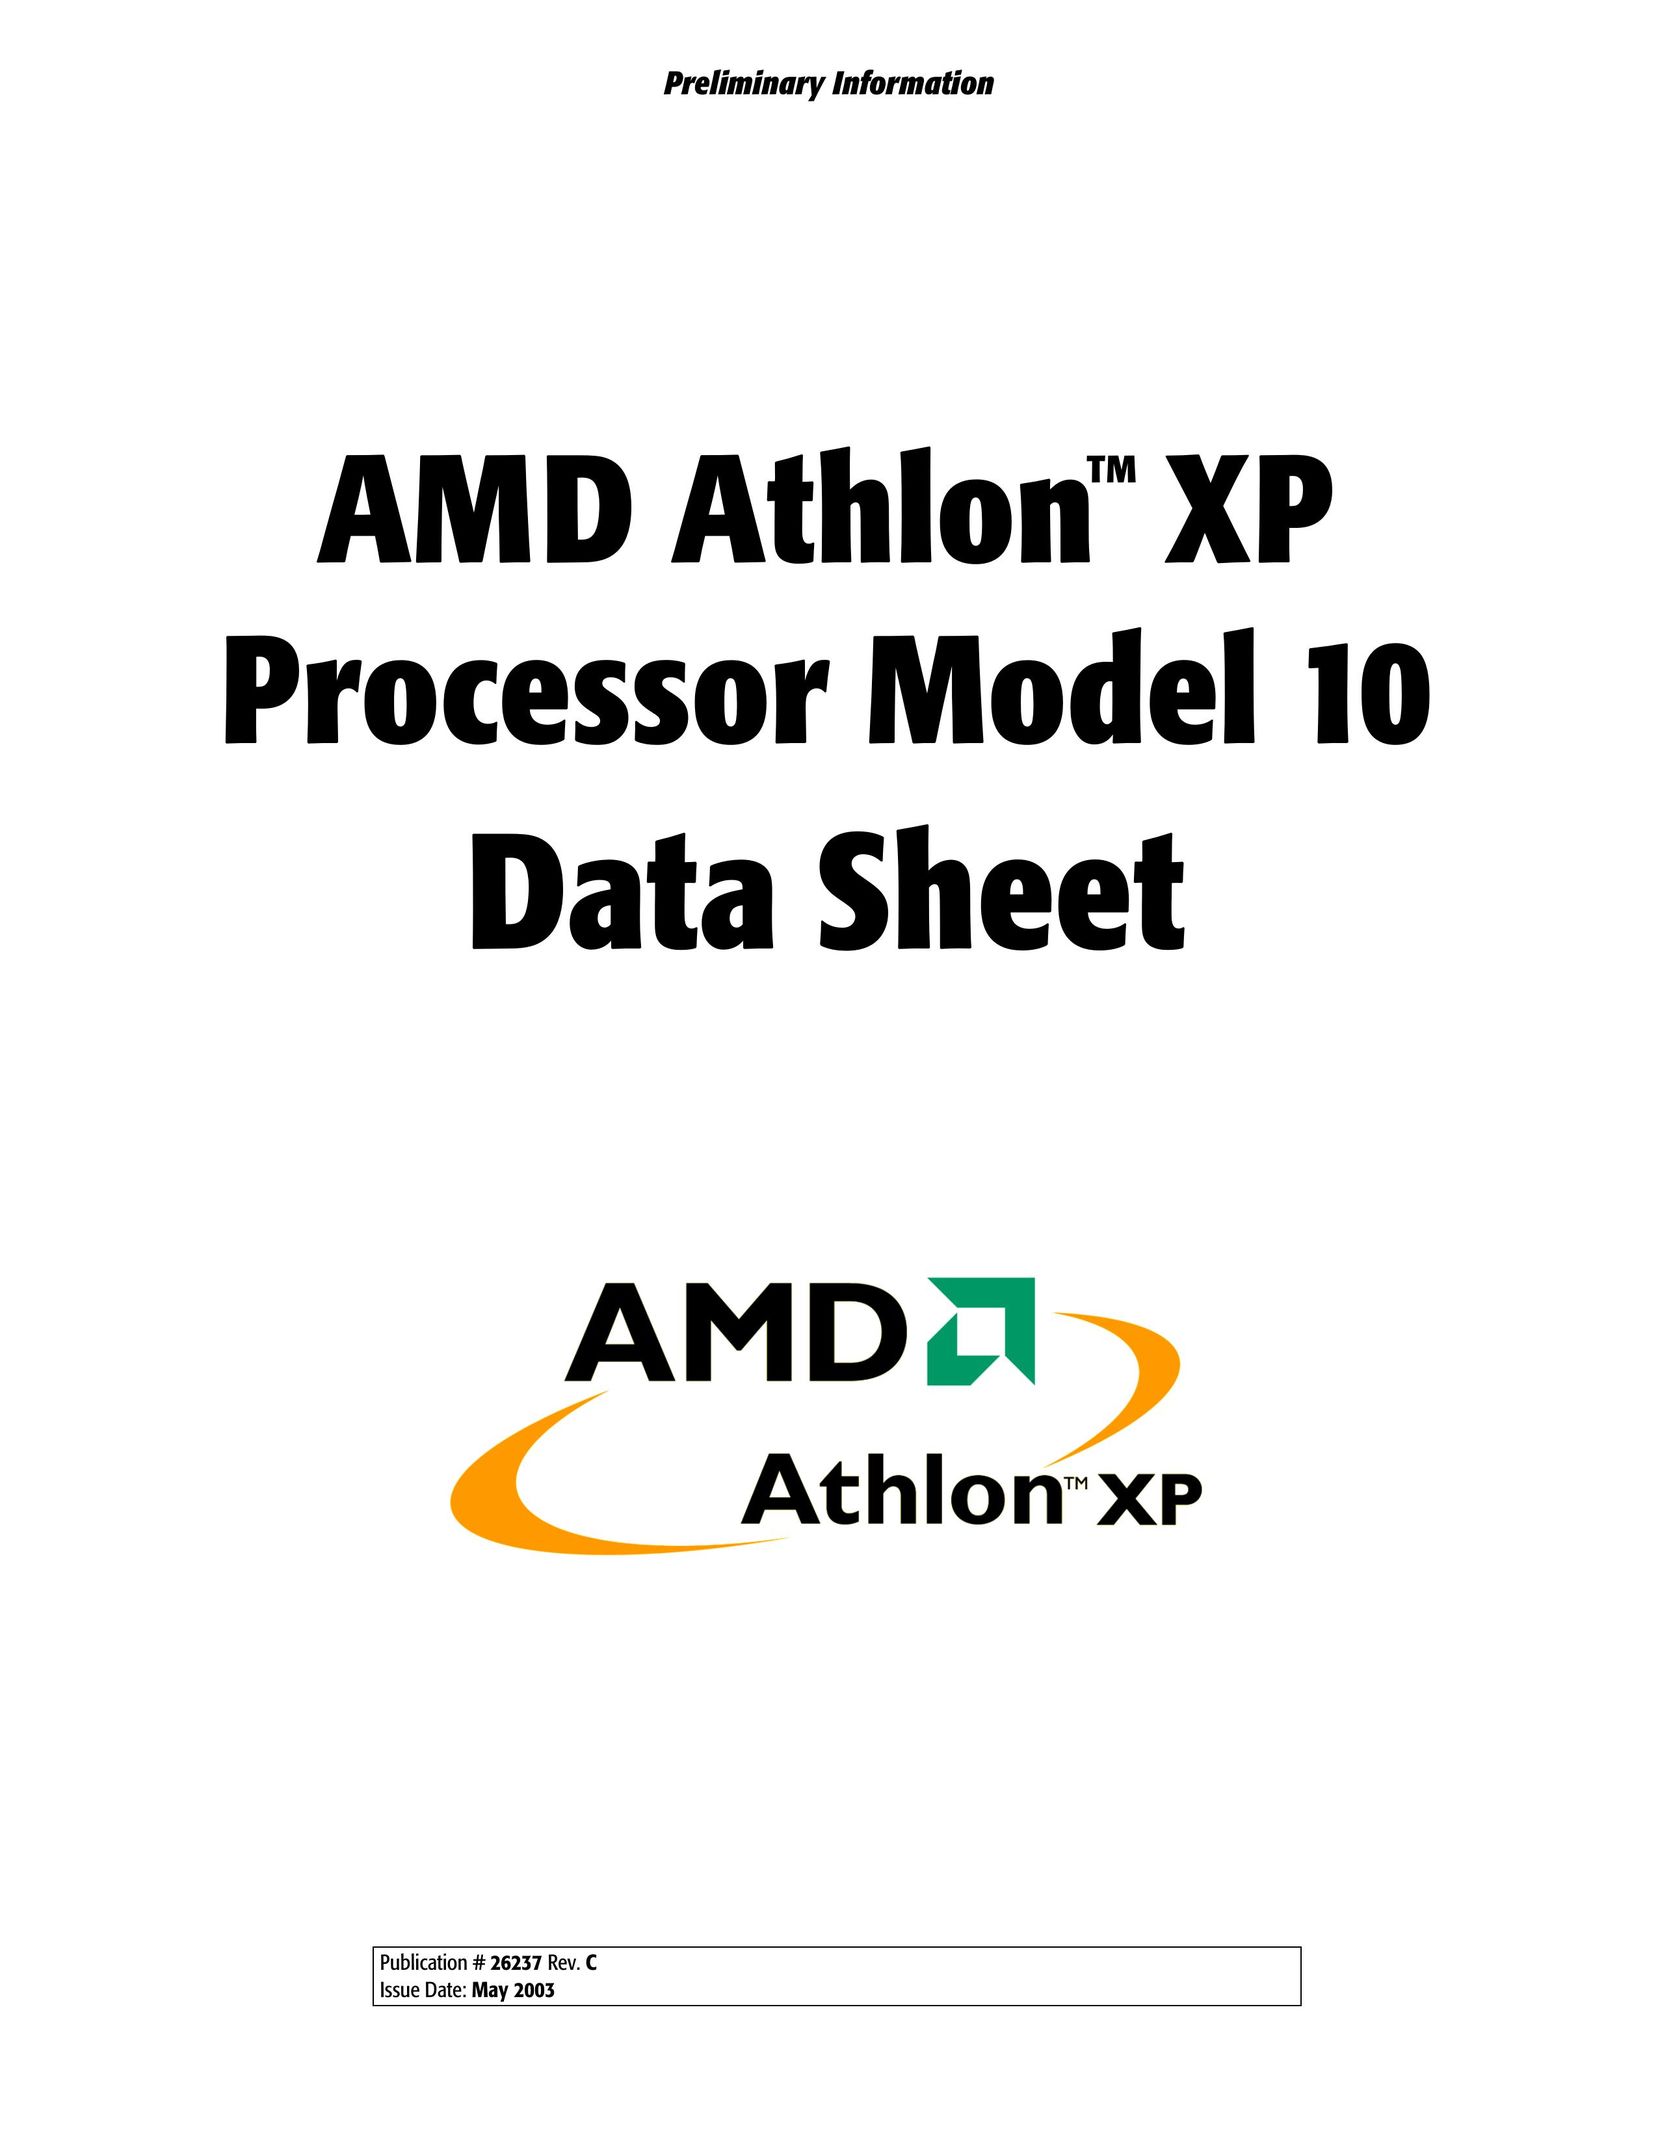 AMD 27493 Computer Hardware User Manual